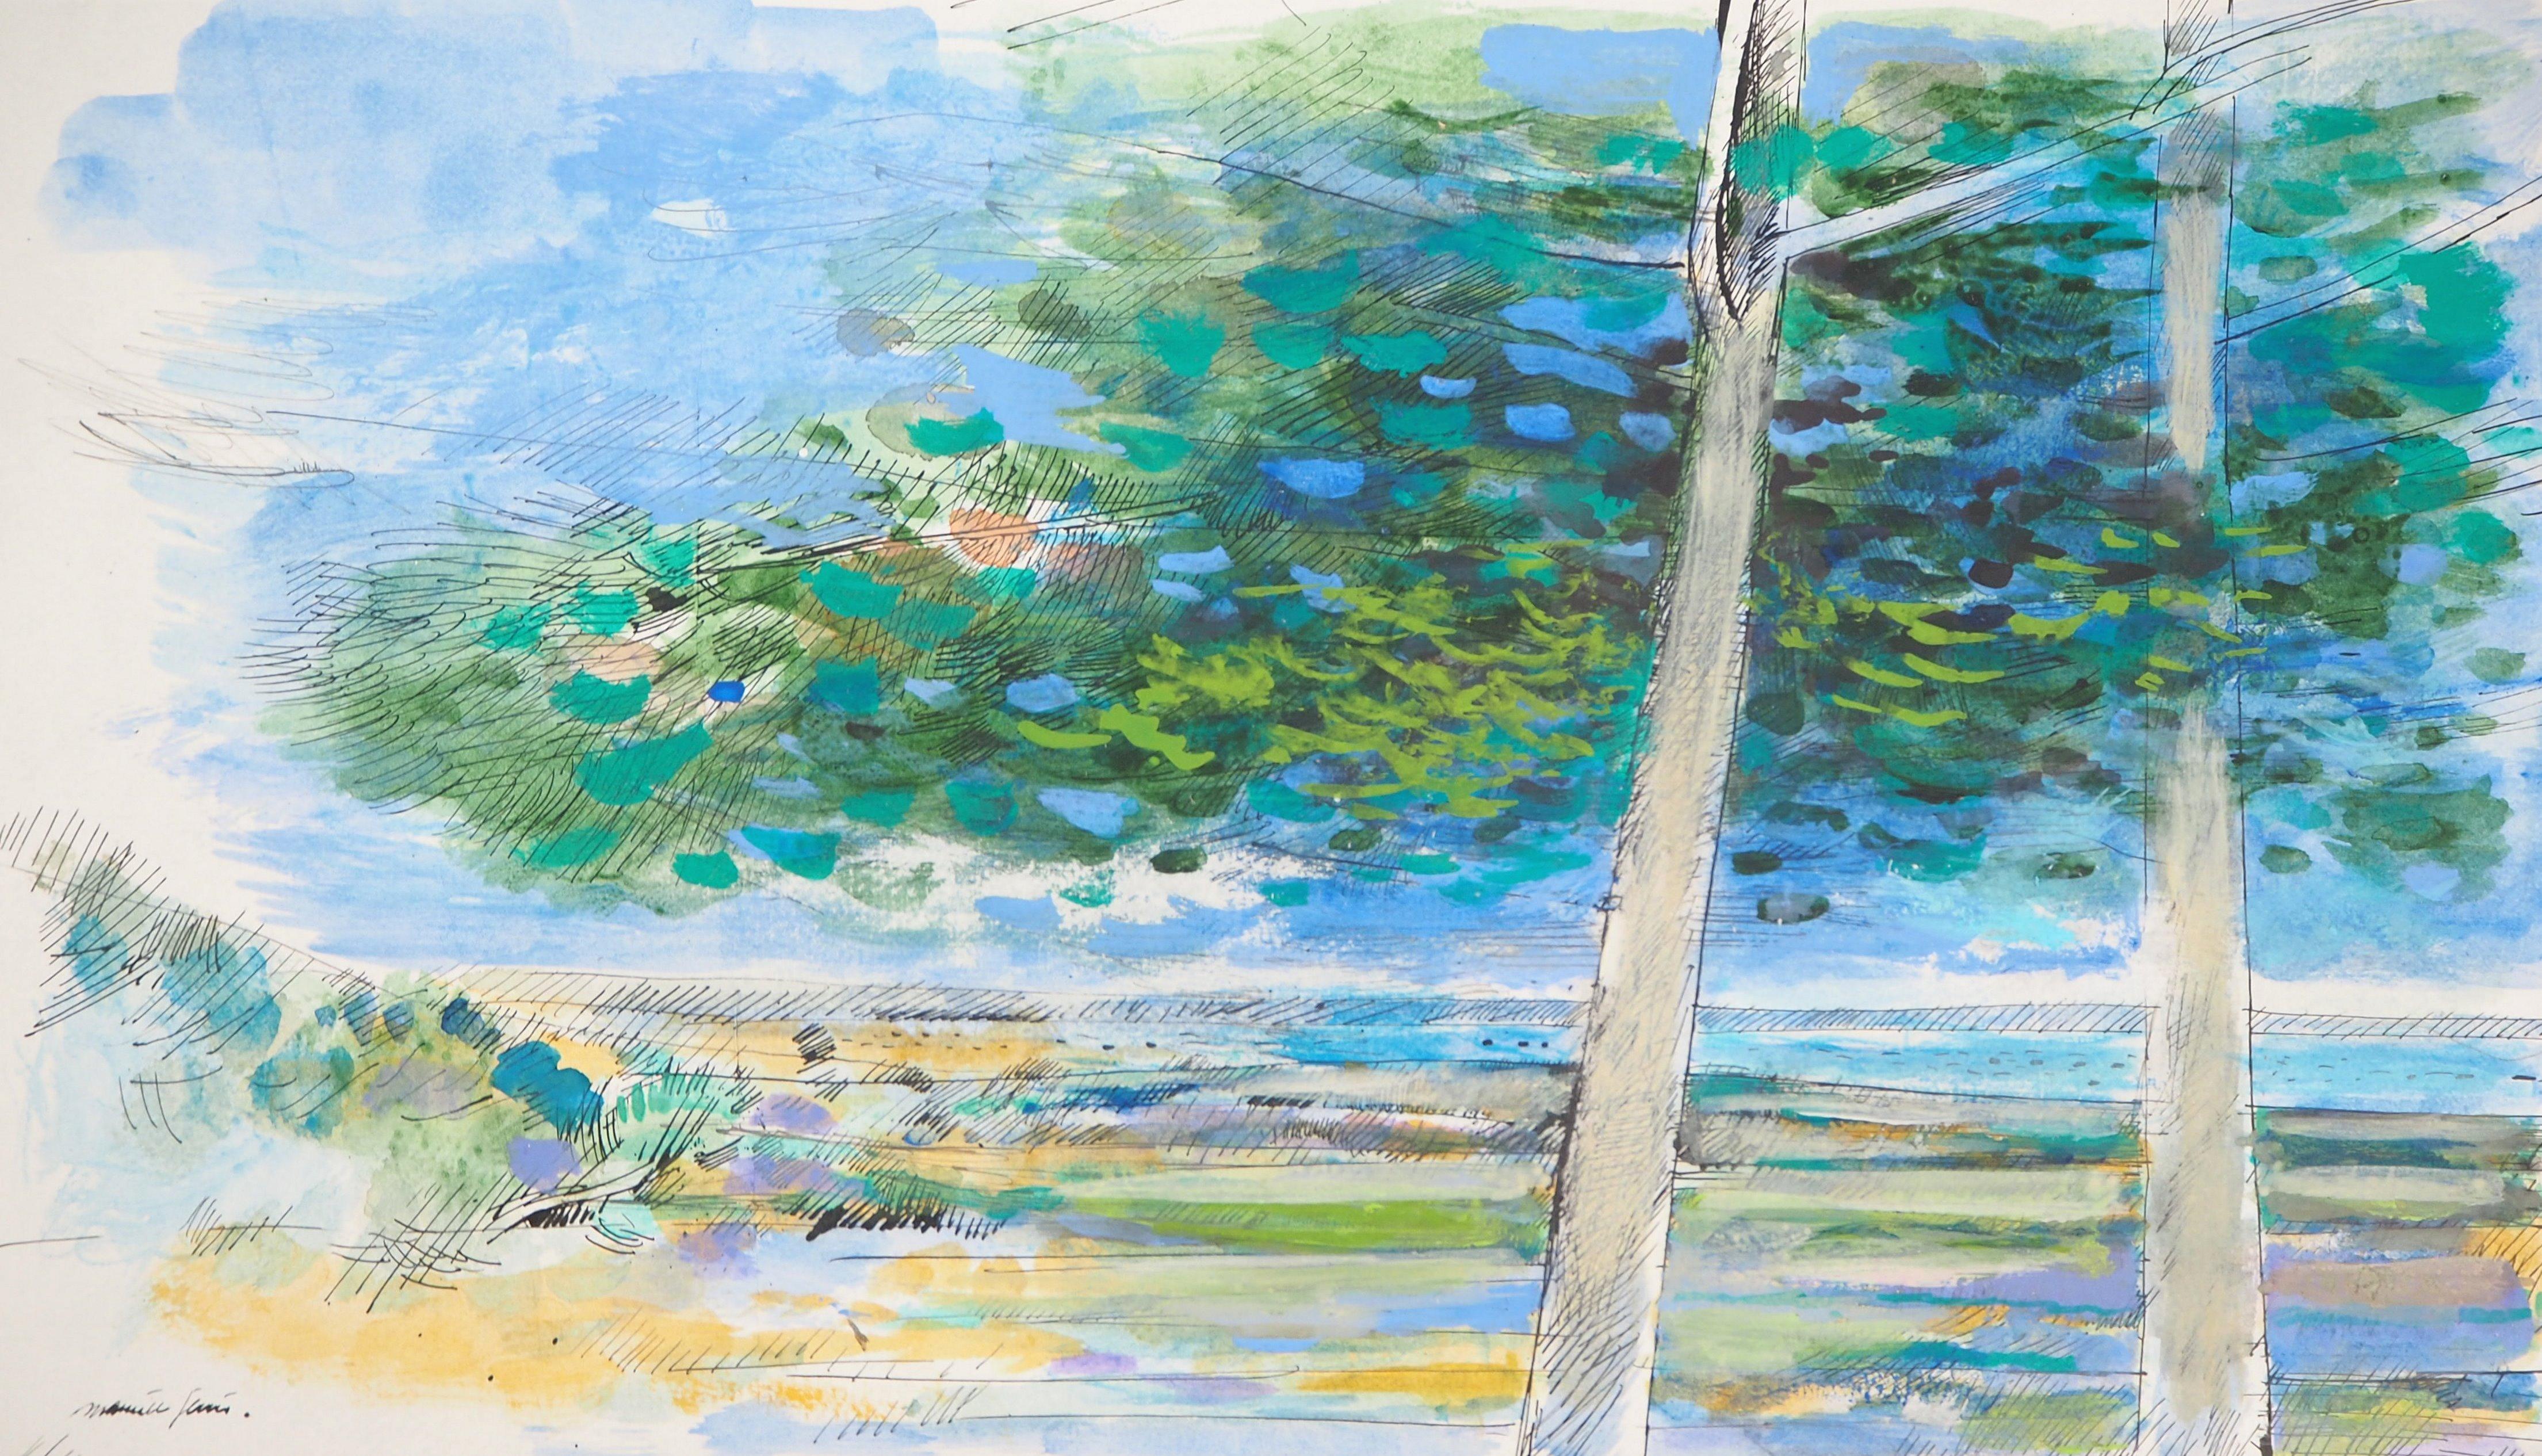 Maurice Genis Landscape Art - ZEN Calming Nature Scenery - Original Handsigned Watercolor and Gouache Painting